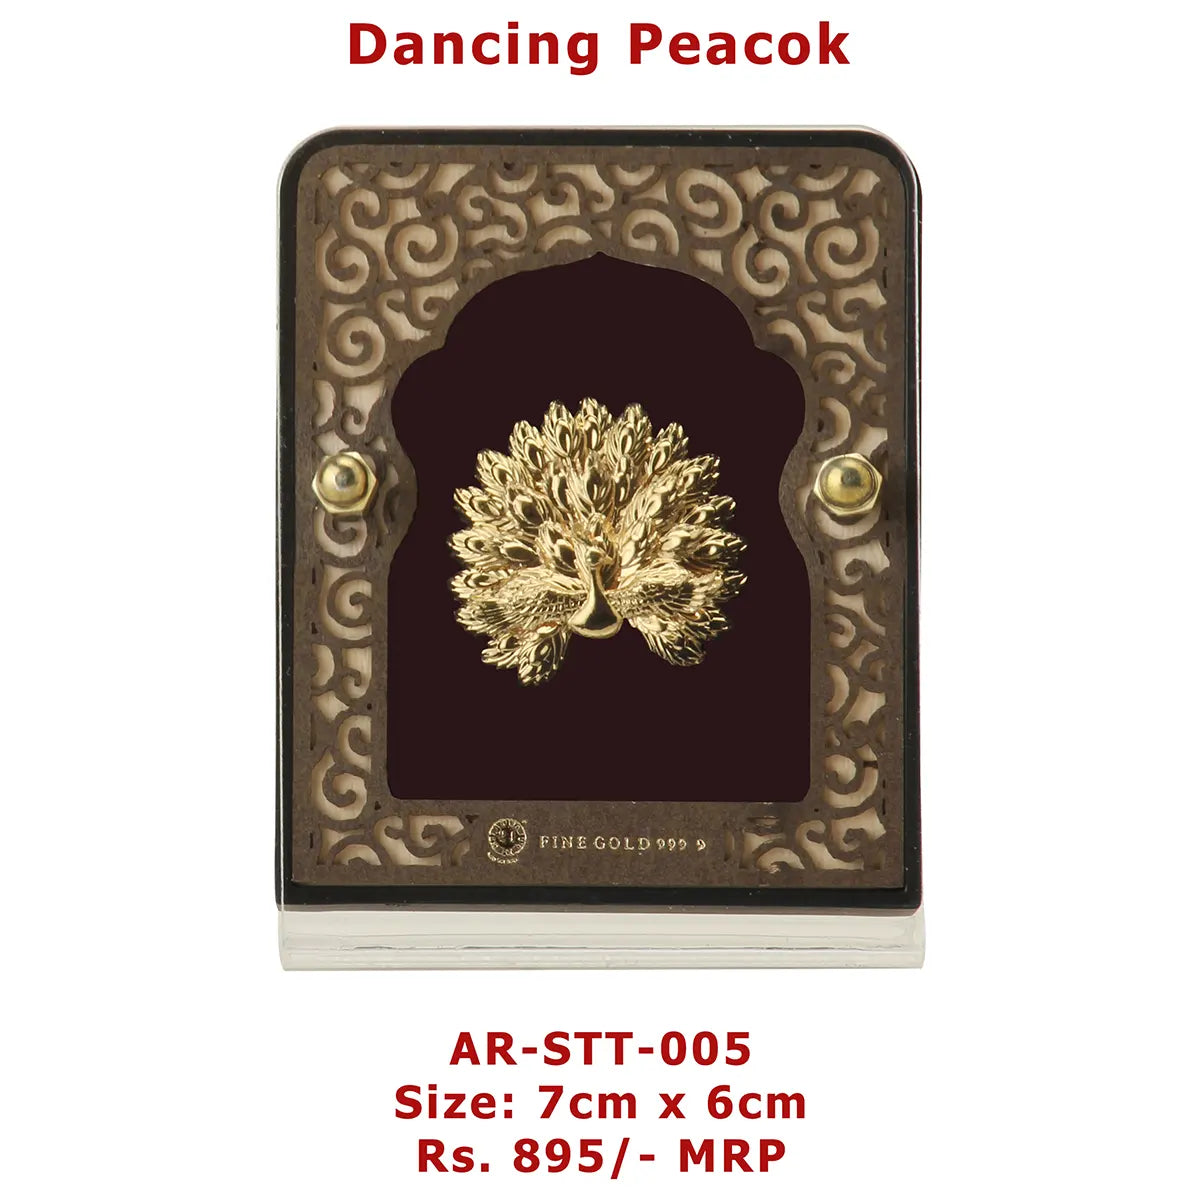 Dancing Peacock Table Top Frame